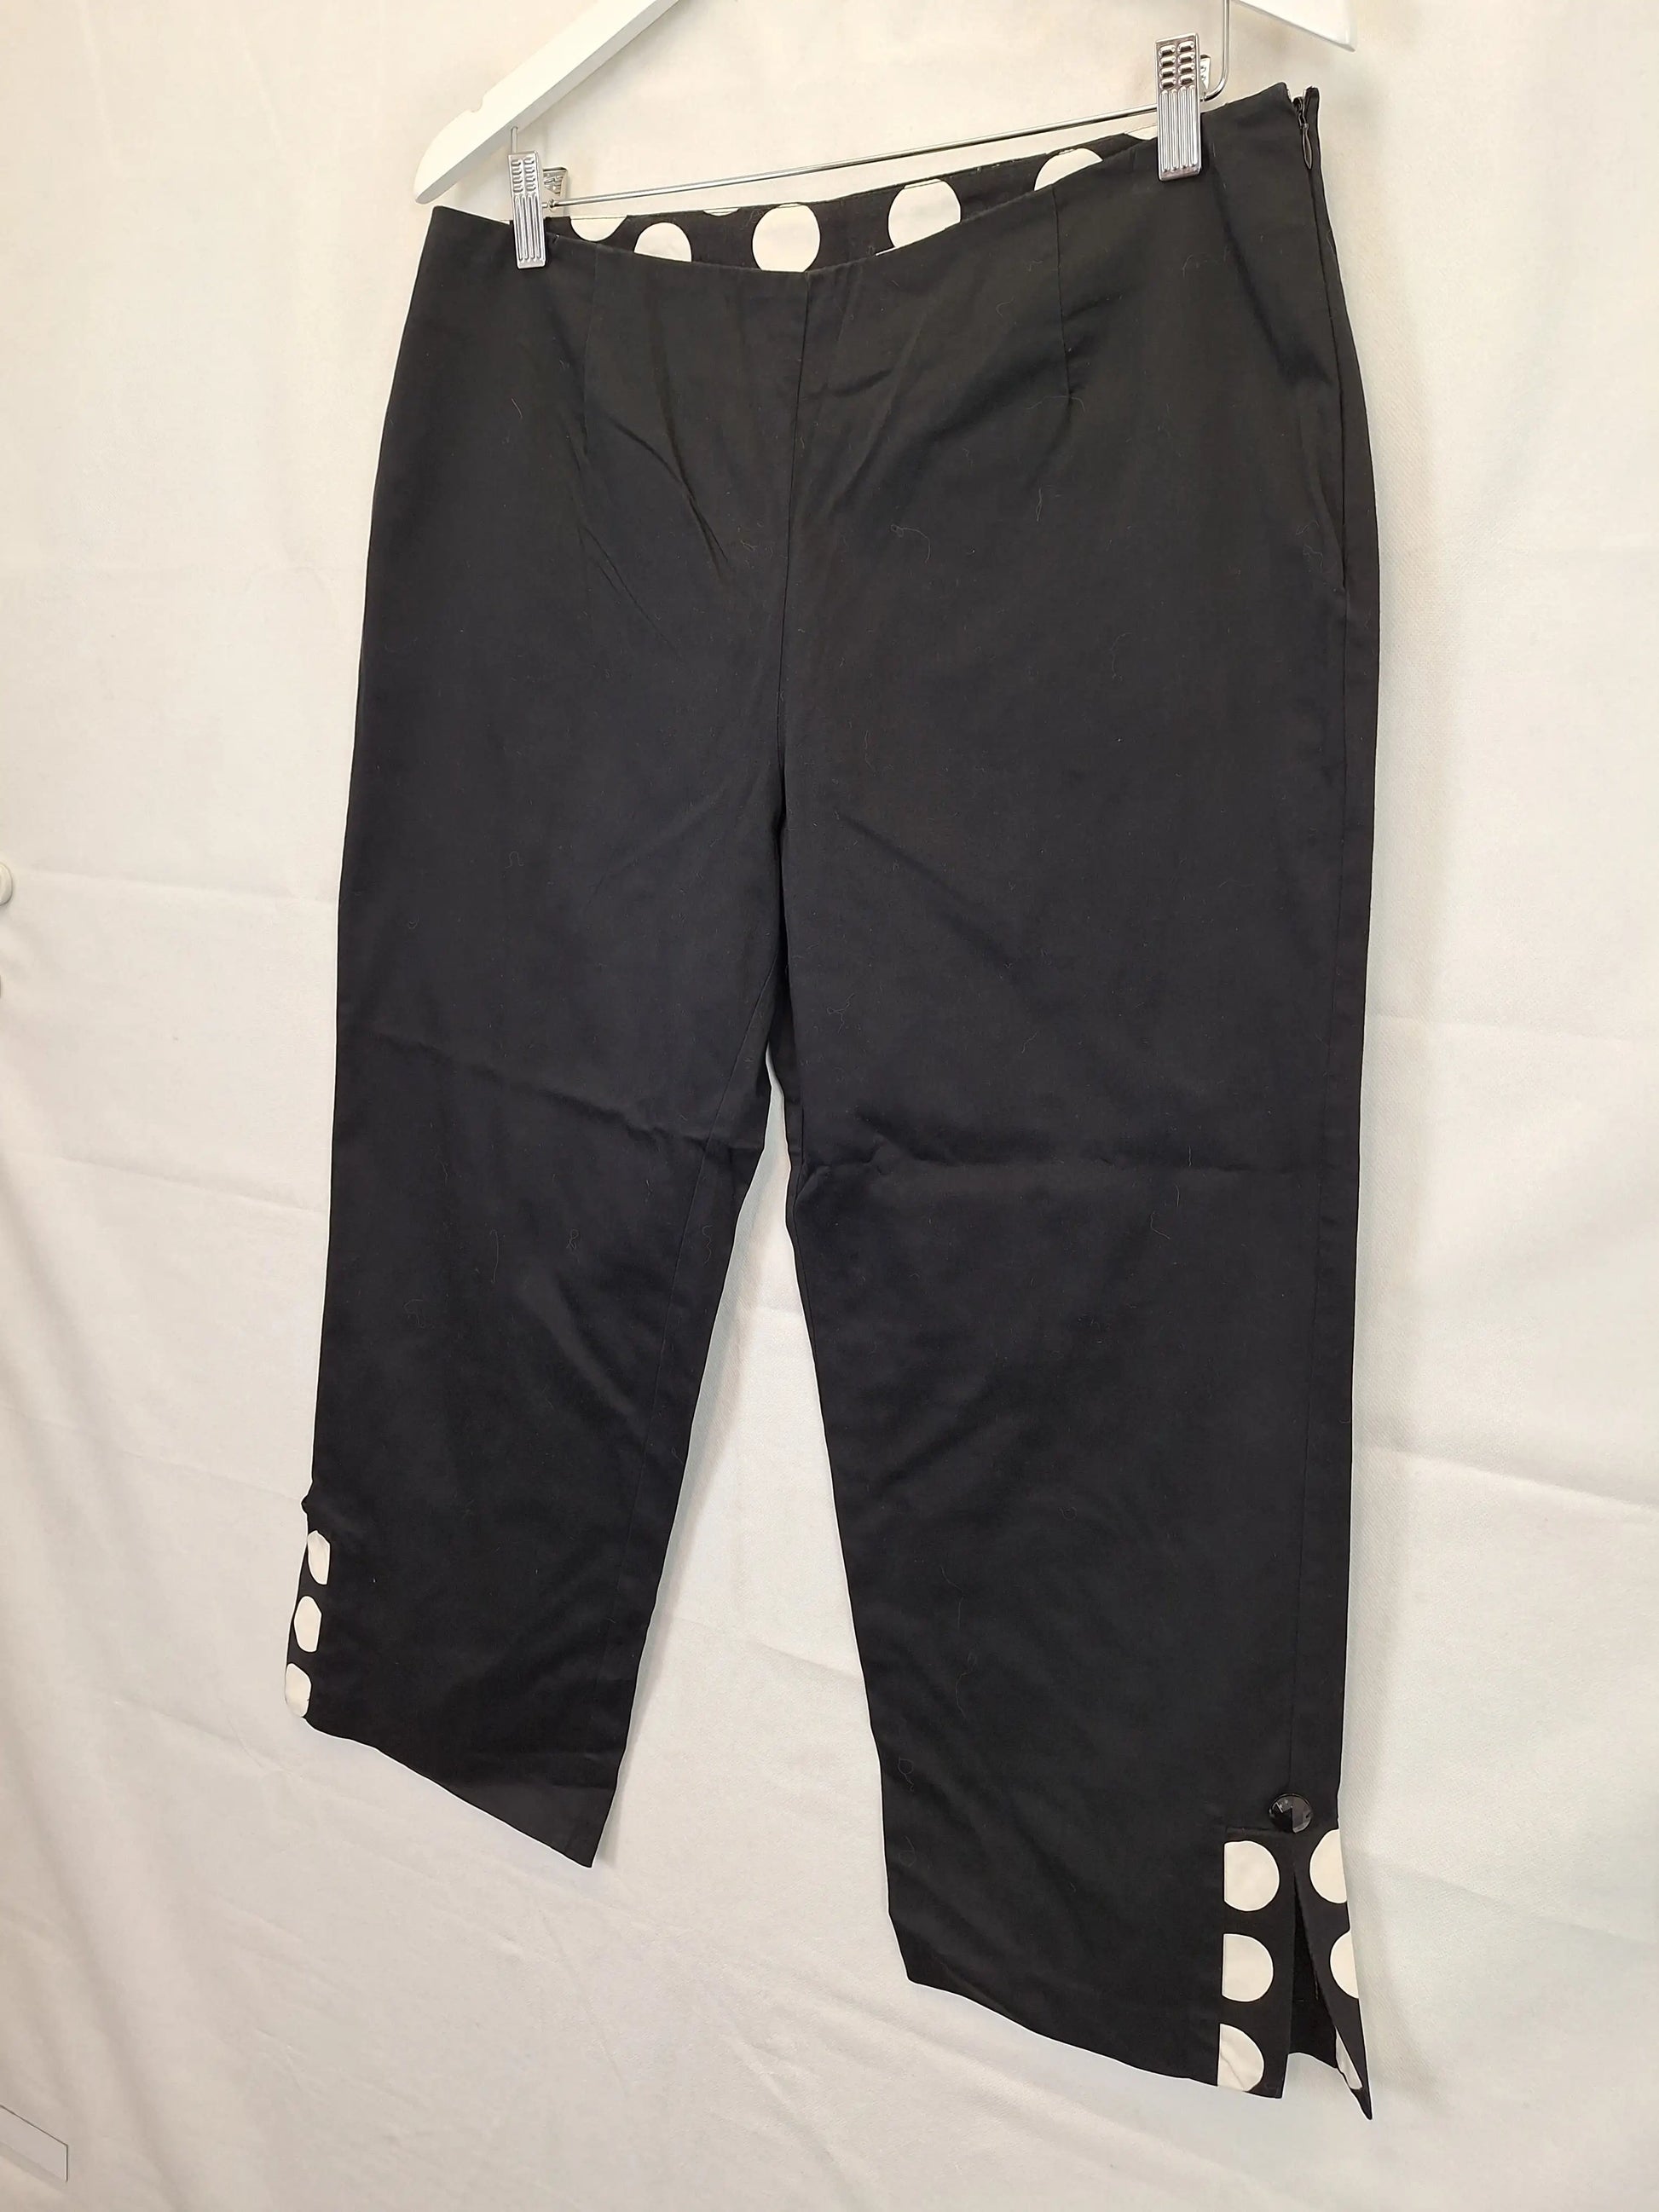 RJ Wear Spotted Trimmed Capri Pants Size 12 – SwapUp